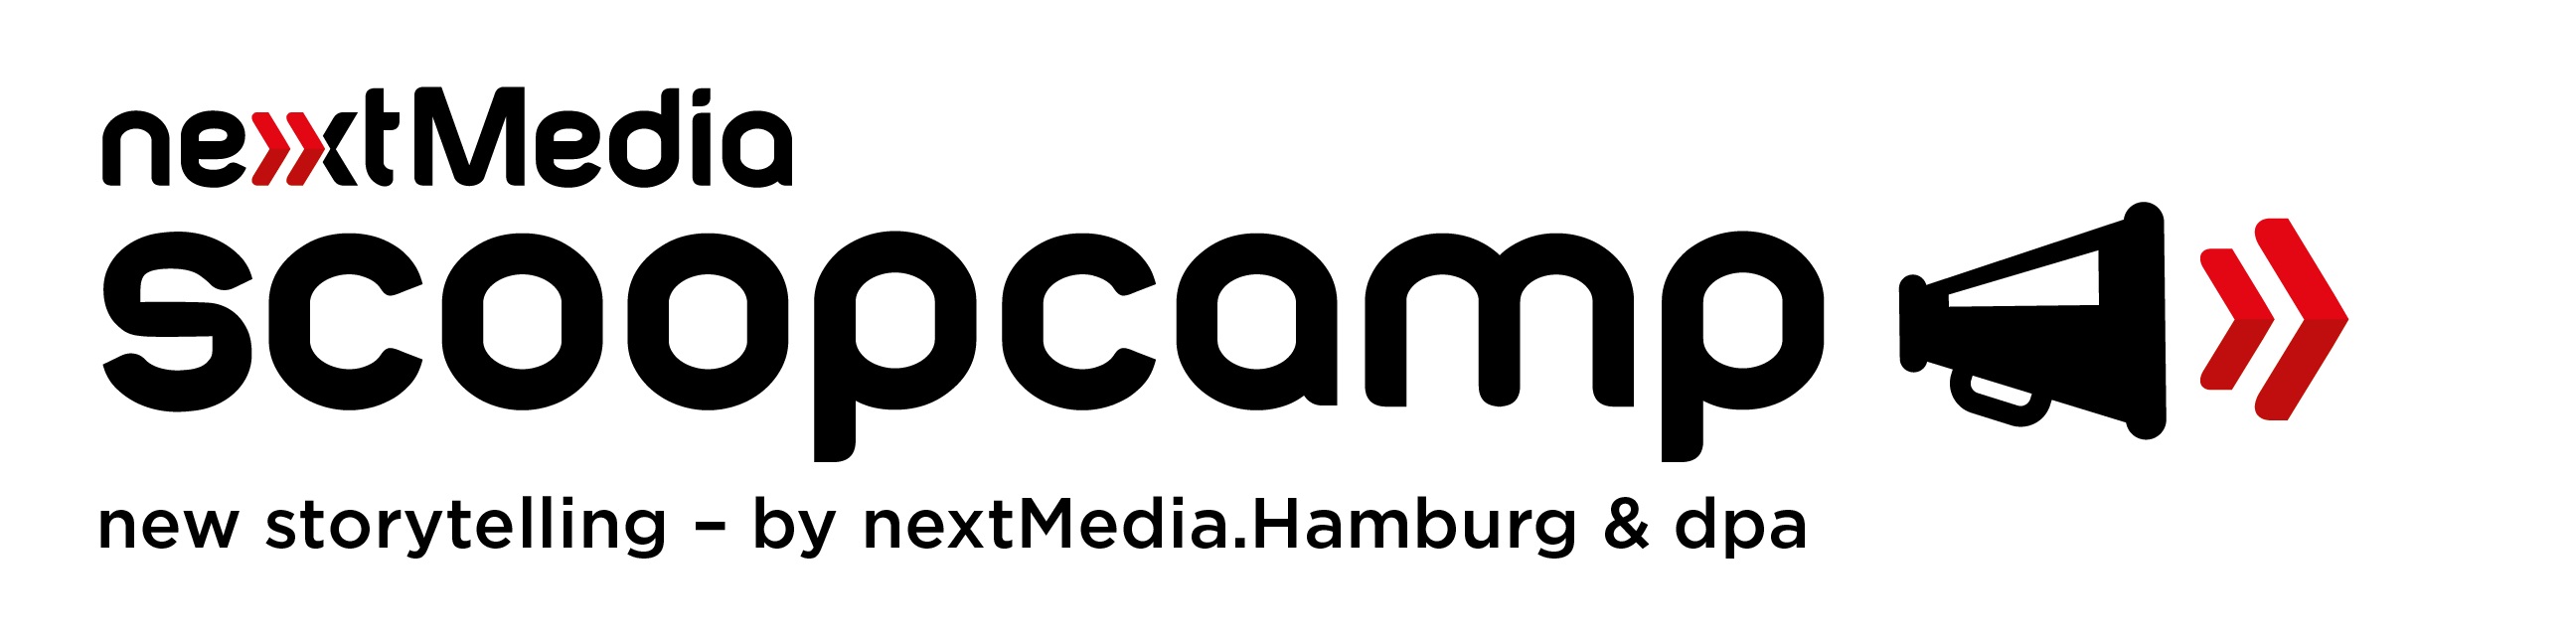 Logo des scoopcamps